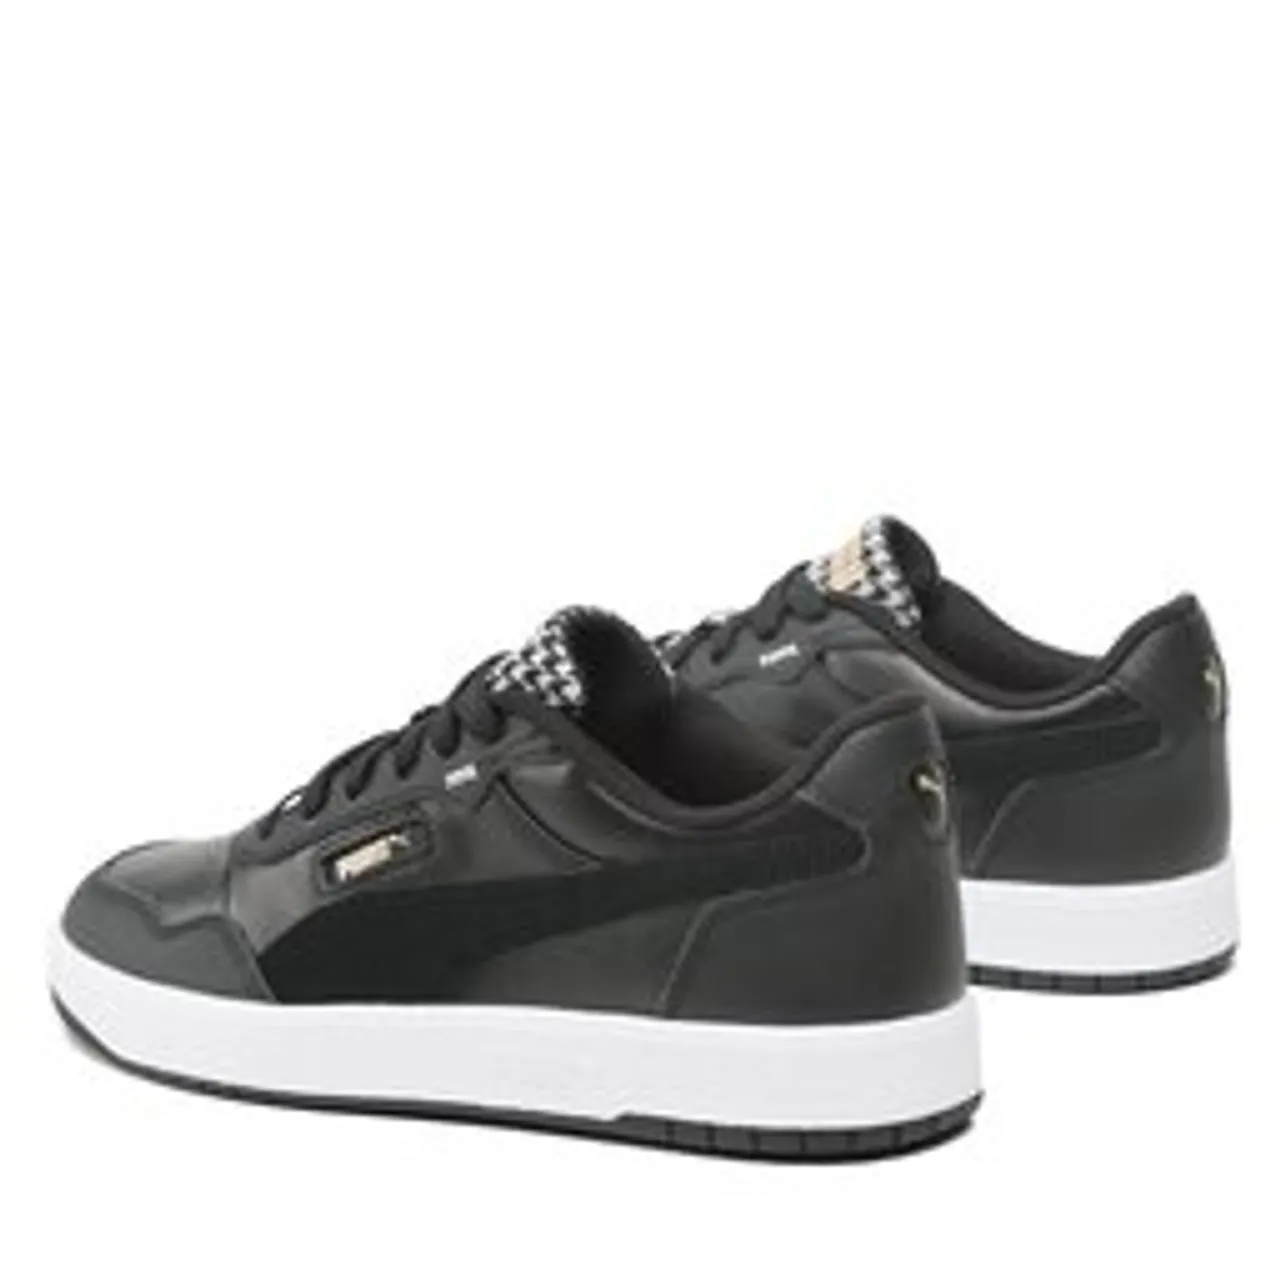 Sneakers Puma Court Ultra Houndstooth 389369 02 Puma Black/Puma Black/White